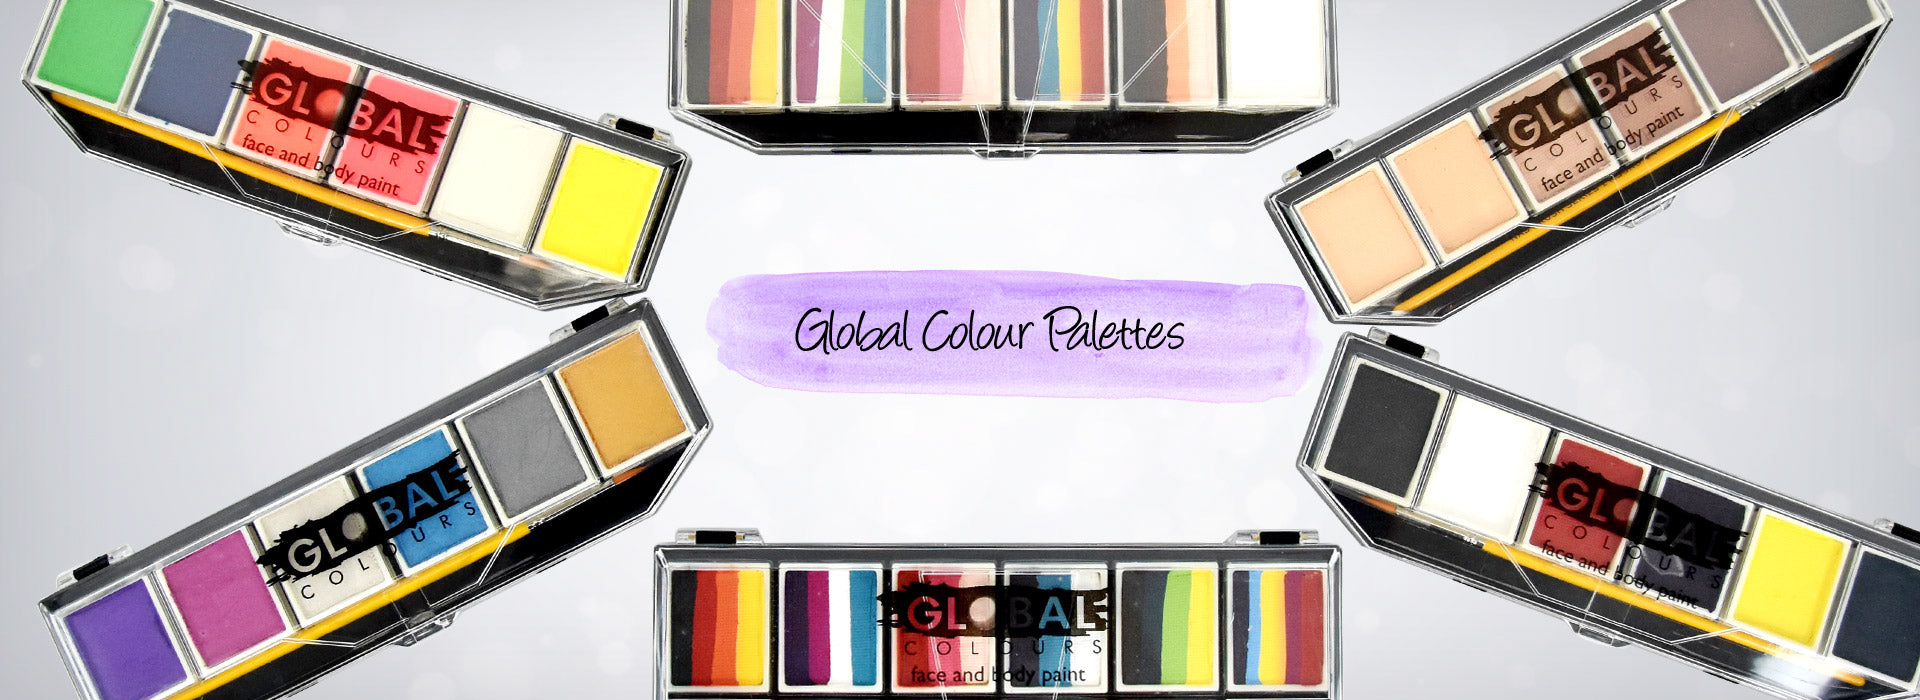 Global Colours Palettes